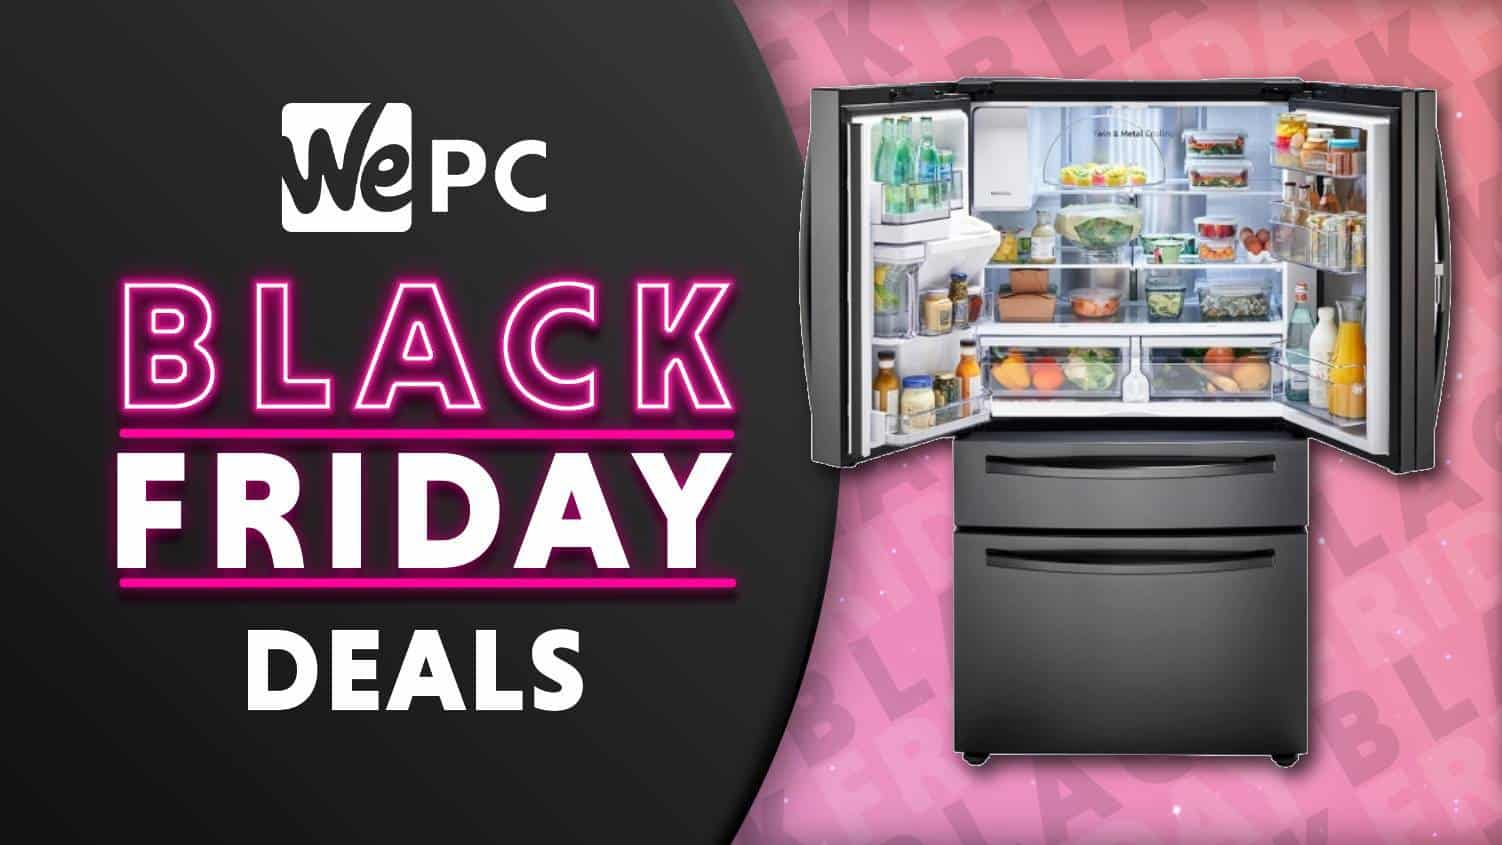 Save $1100 on Samsung Showcase 4-Door fridge Black Friday Samsung fridge deals